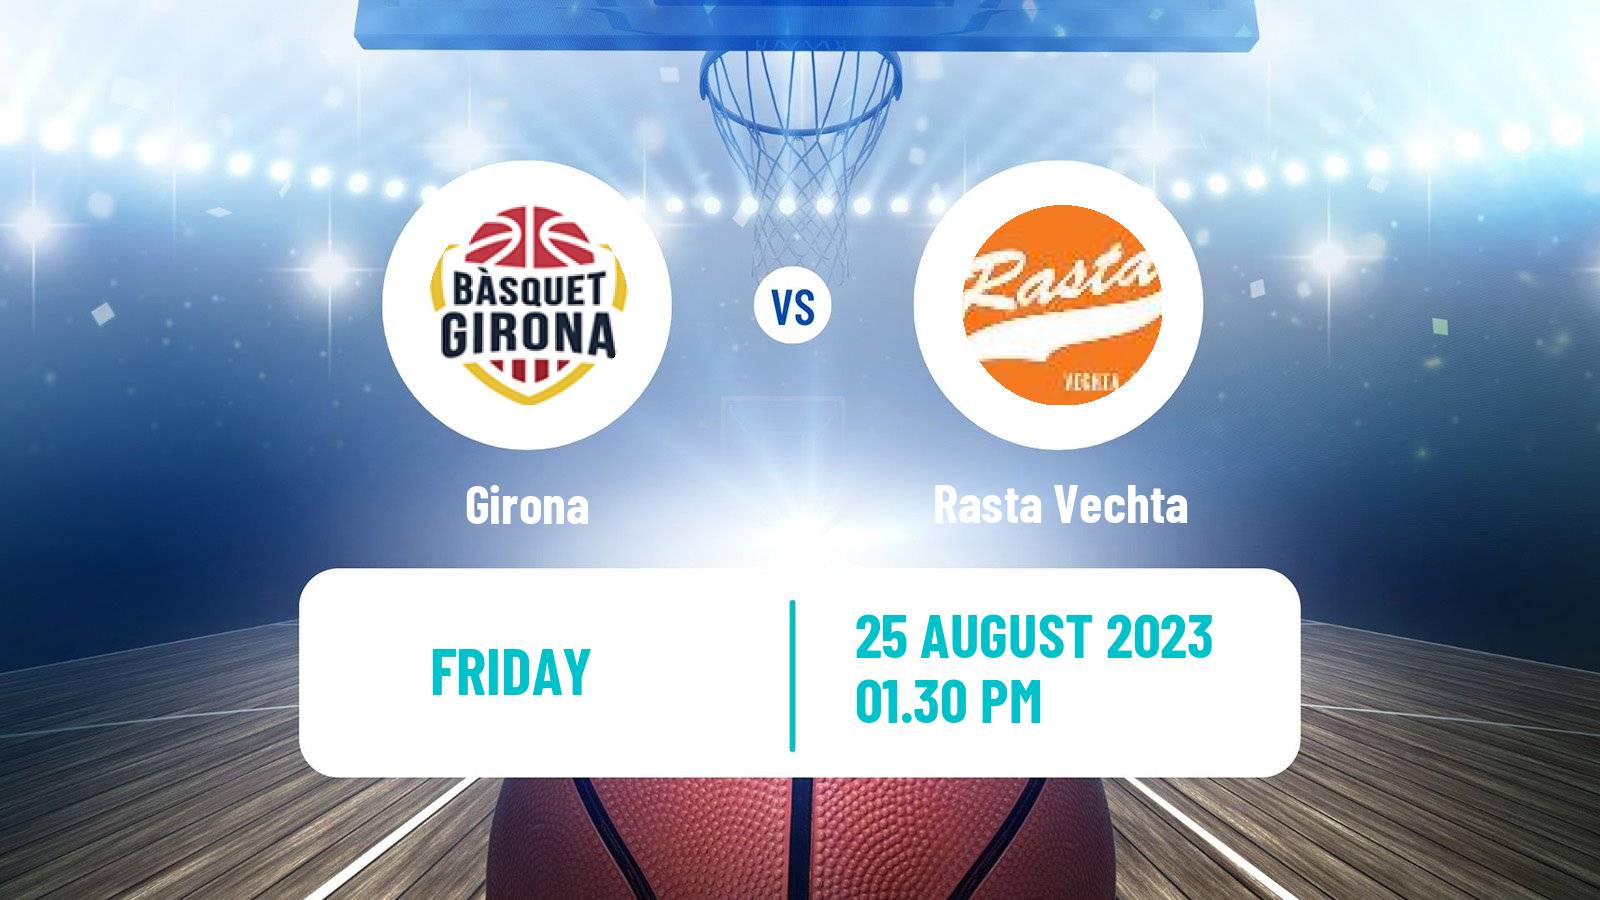 Basketball Club Friendly Basketball Girona - Rasta Vechta